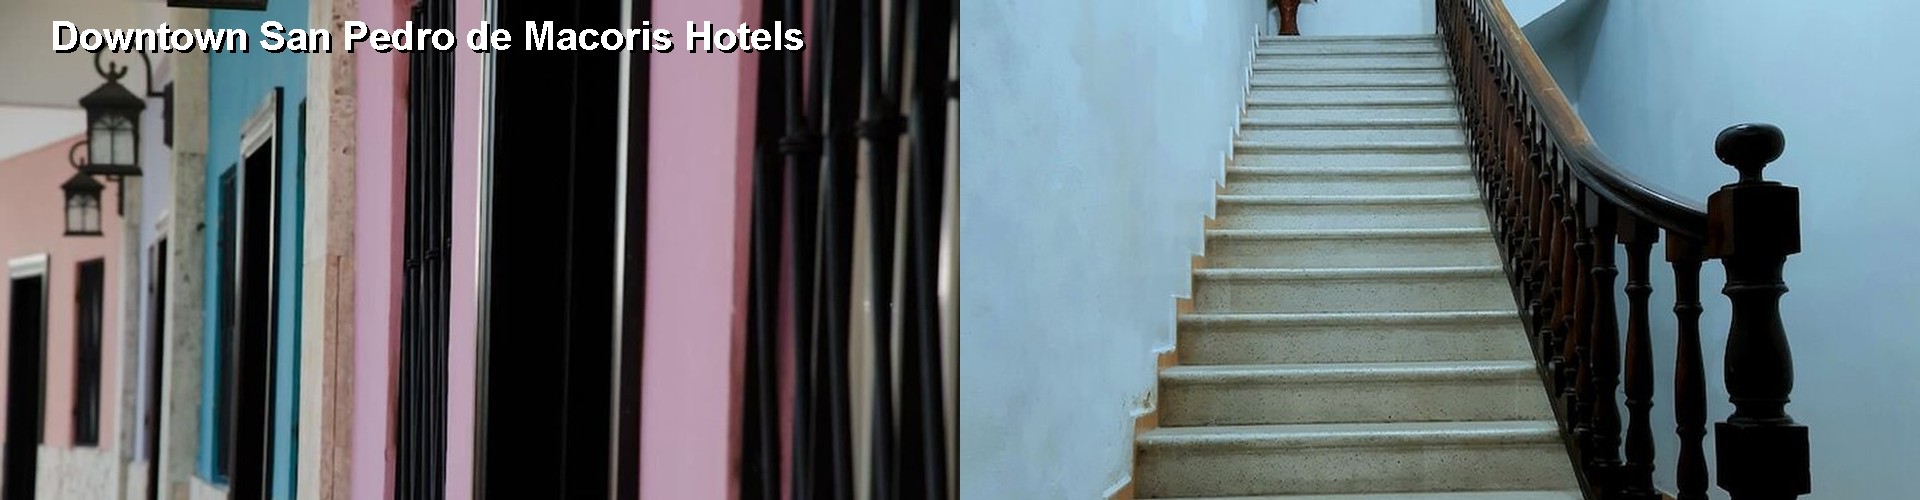 5 Best Hotels near Downtown San Pedro de Macoris